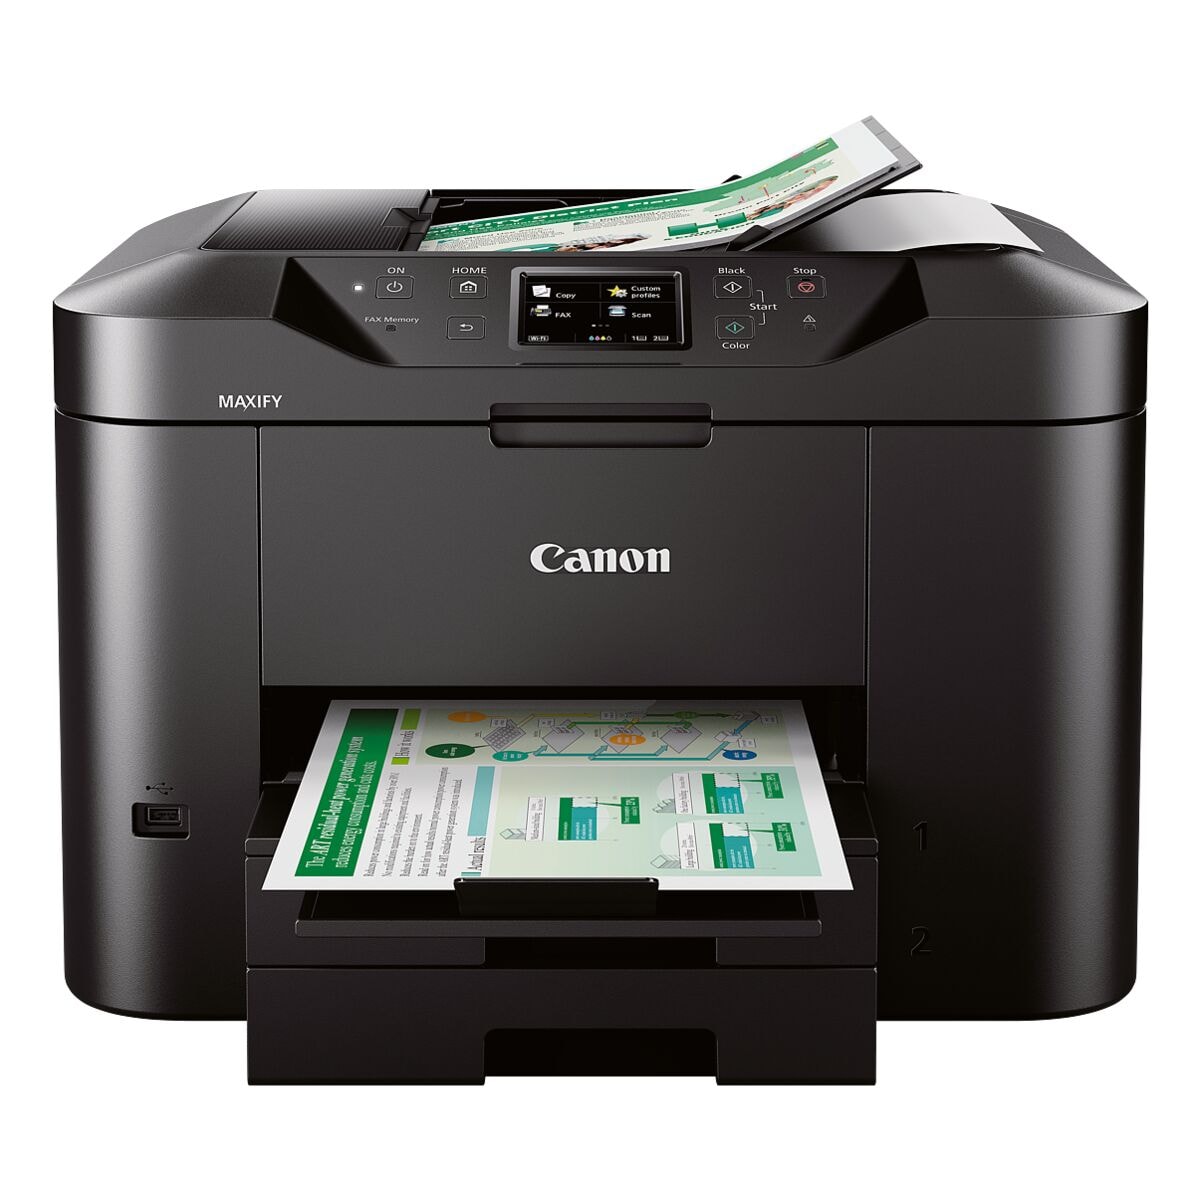 Canon MAXIFY MB2750 Multifunktionsdrucker, A4 Farb-Tintenstrahldrucker, mit WLAN und LAN